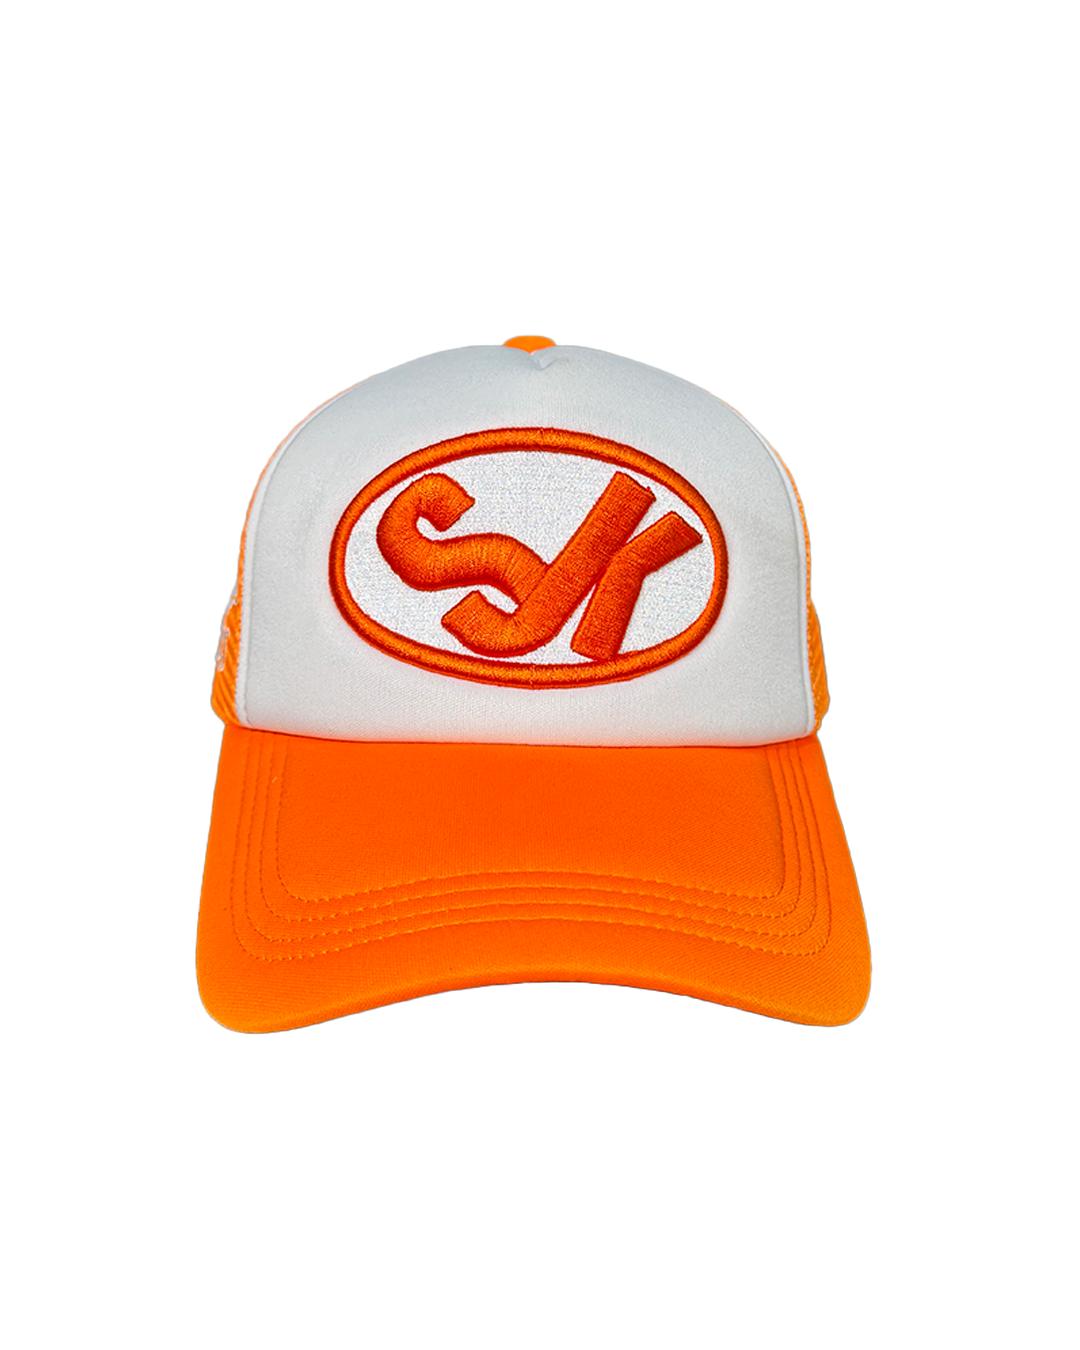 South Kids Orange Trucker Cap